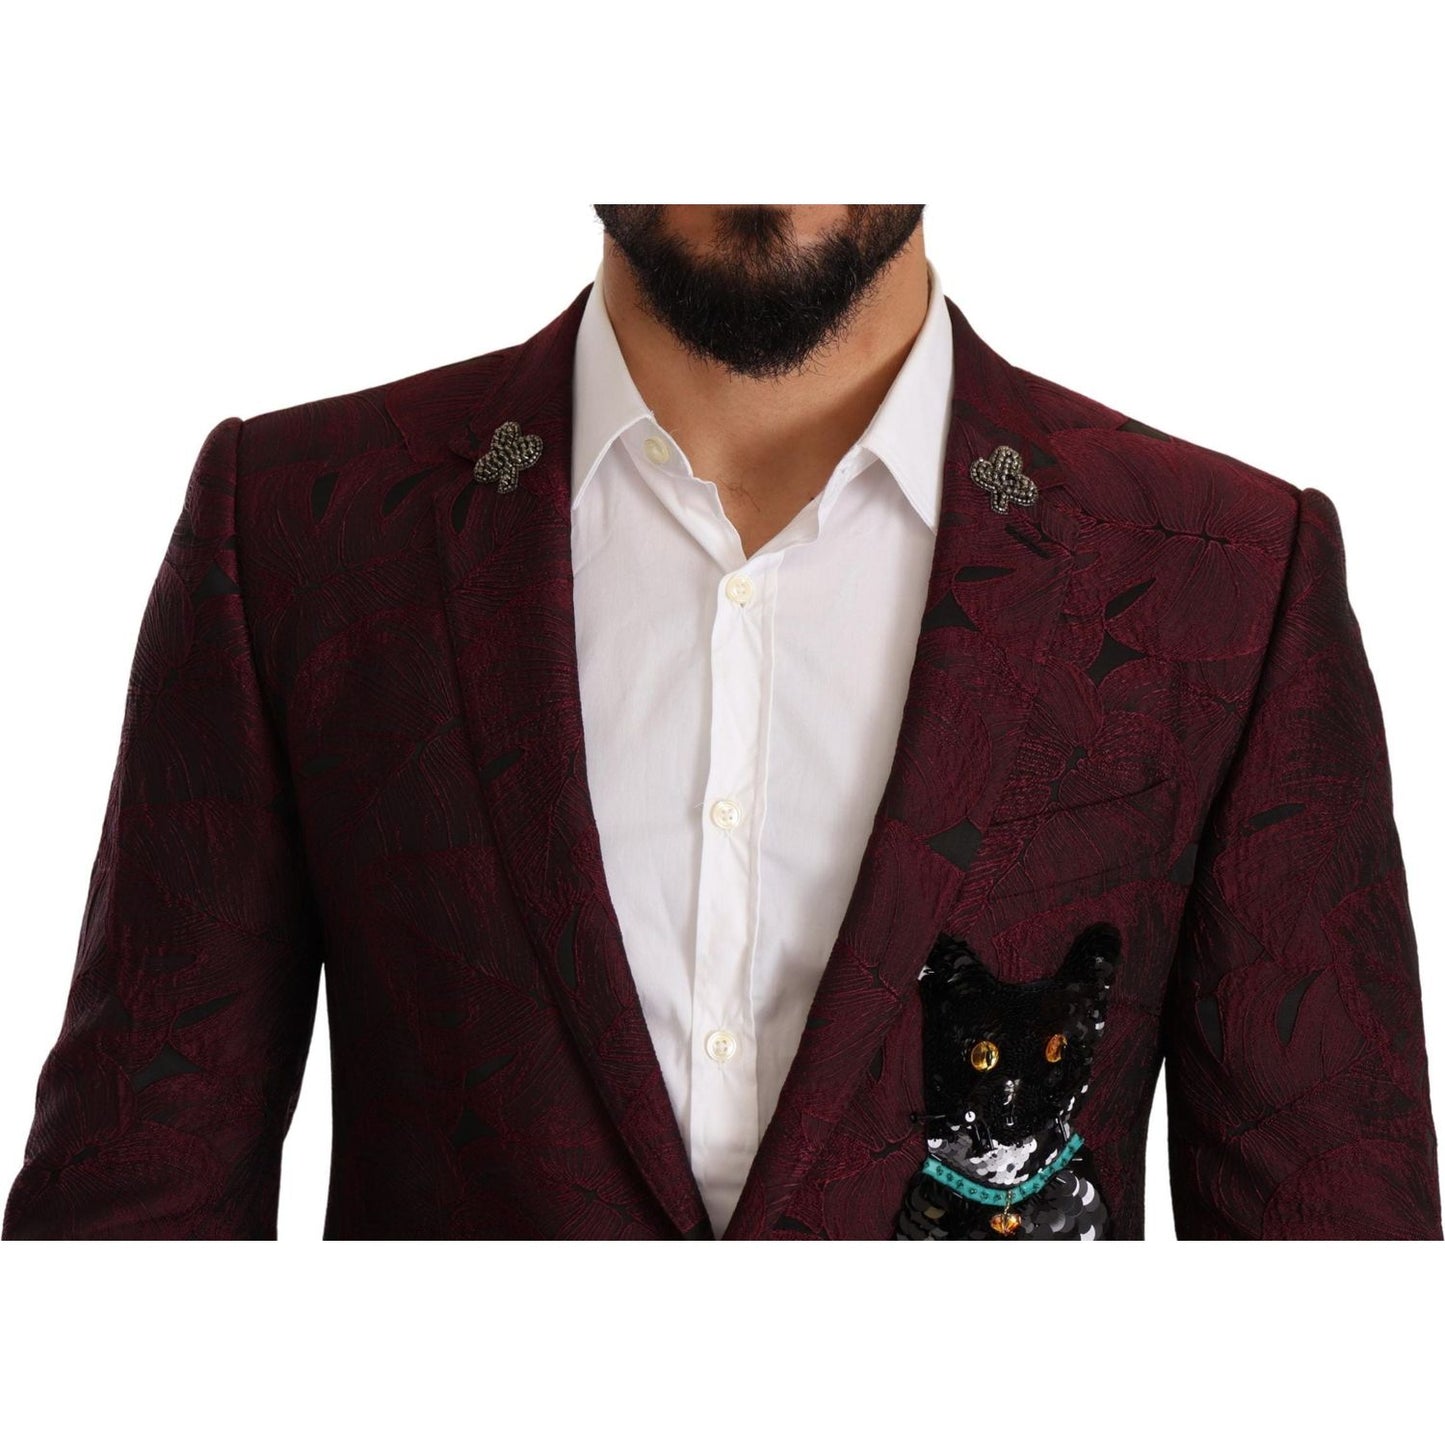 Dolce & Gabbana Elegant Maroon Leaf Pattern Two-Piece Suit maroon-cat-sequin-martini-2-piece-suit